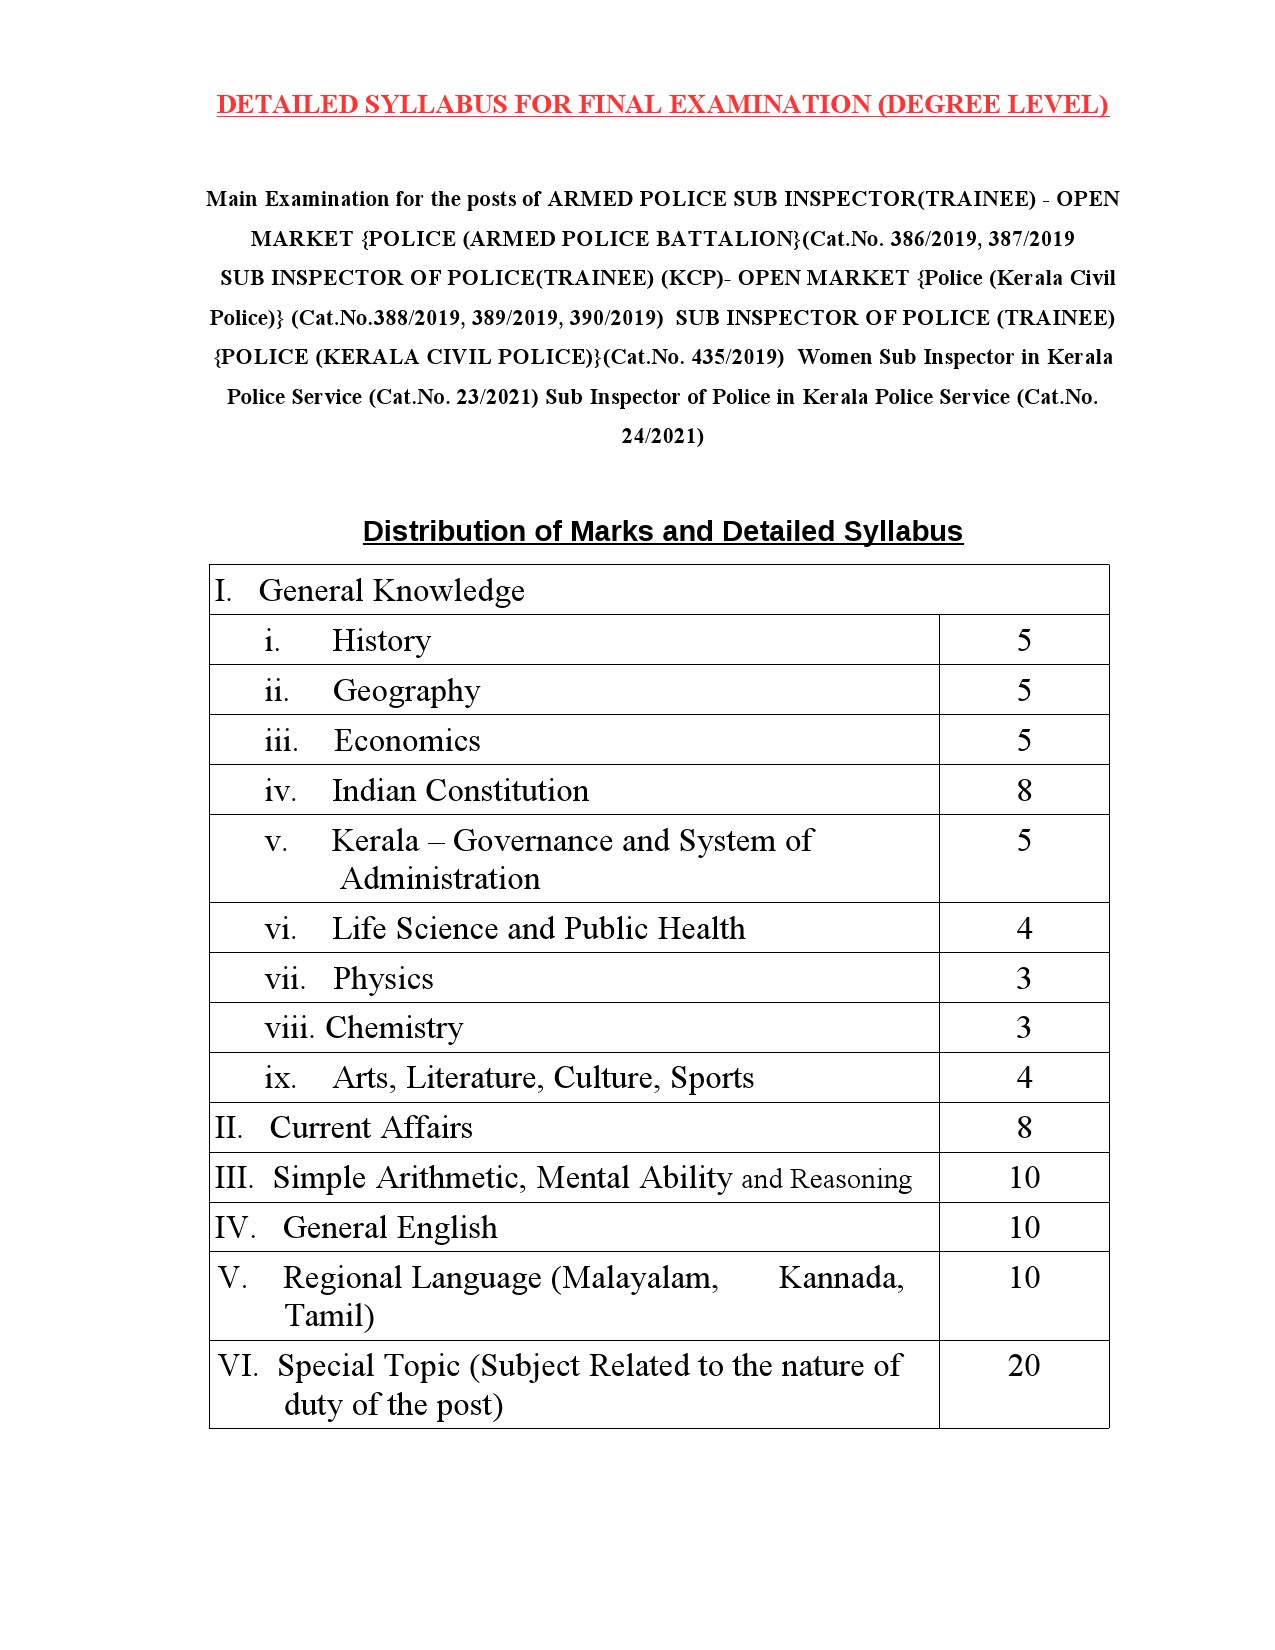 KPSC Degree Level Main Exam Syllabus Armed Police Sub Inspector - Notification Image 1